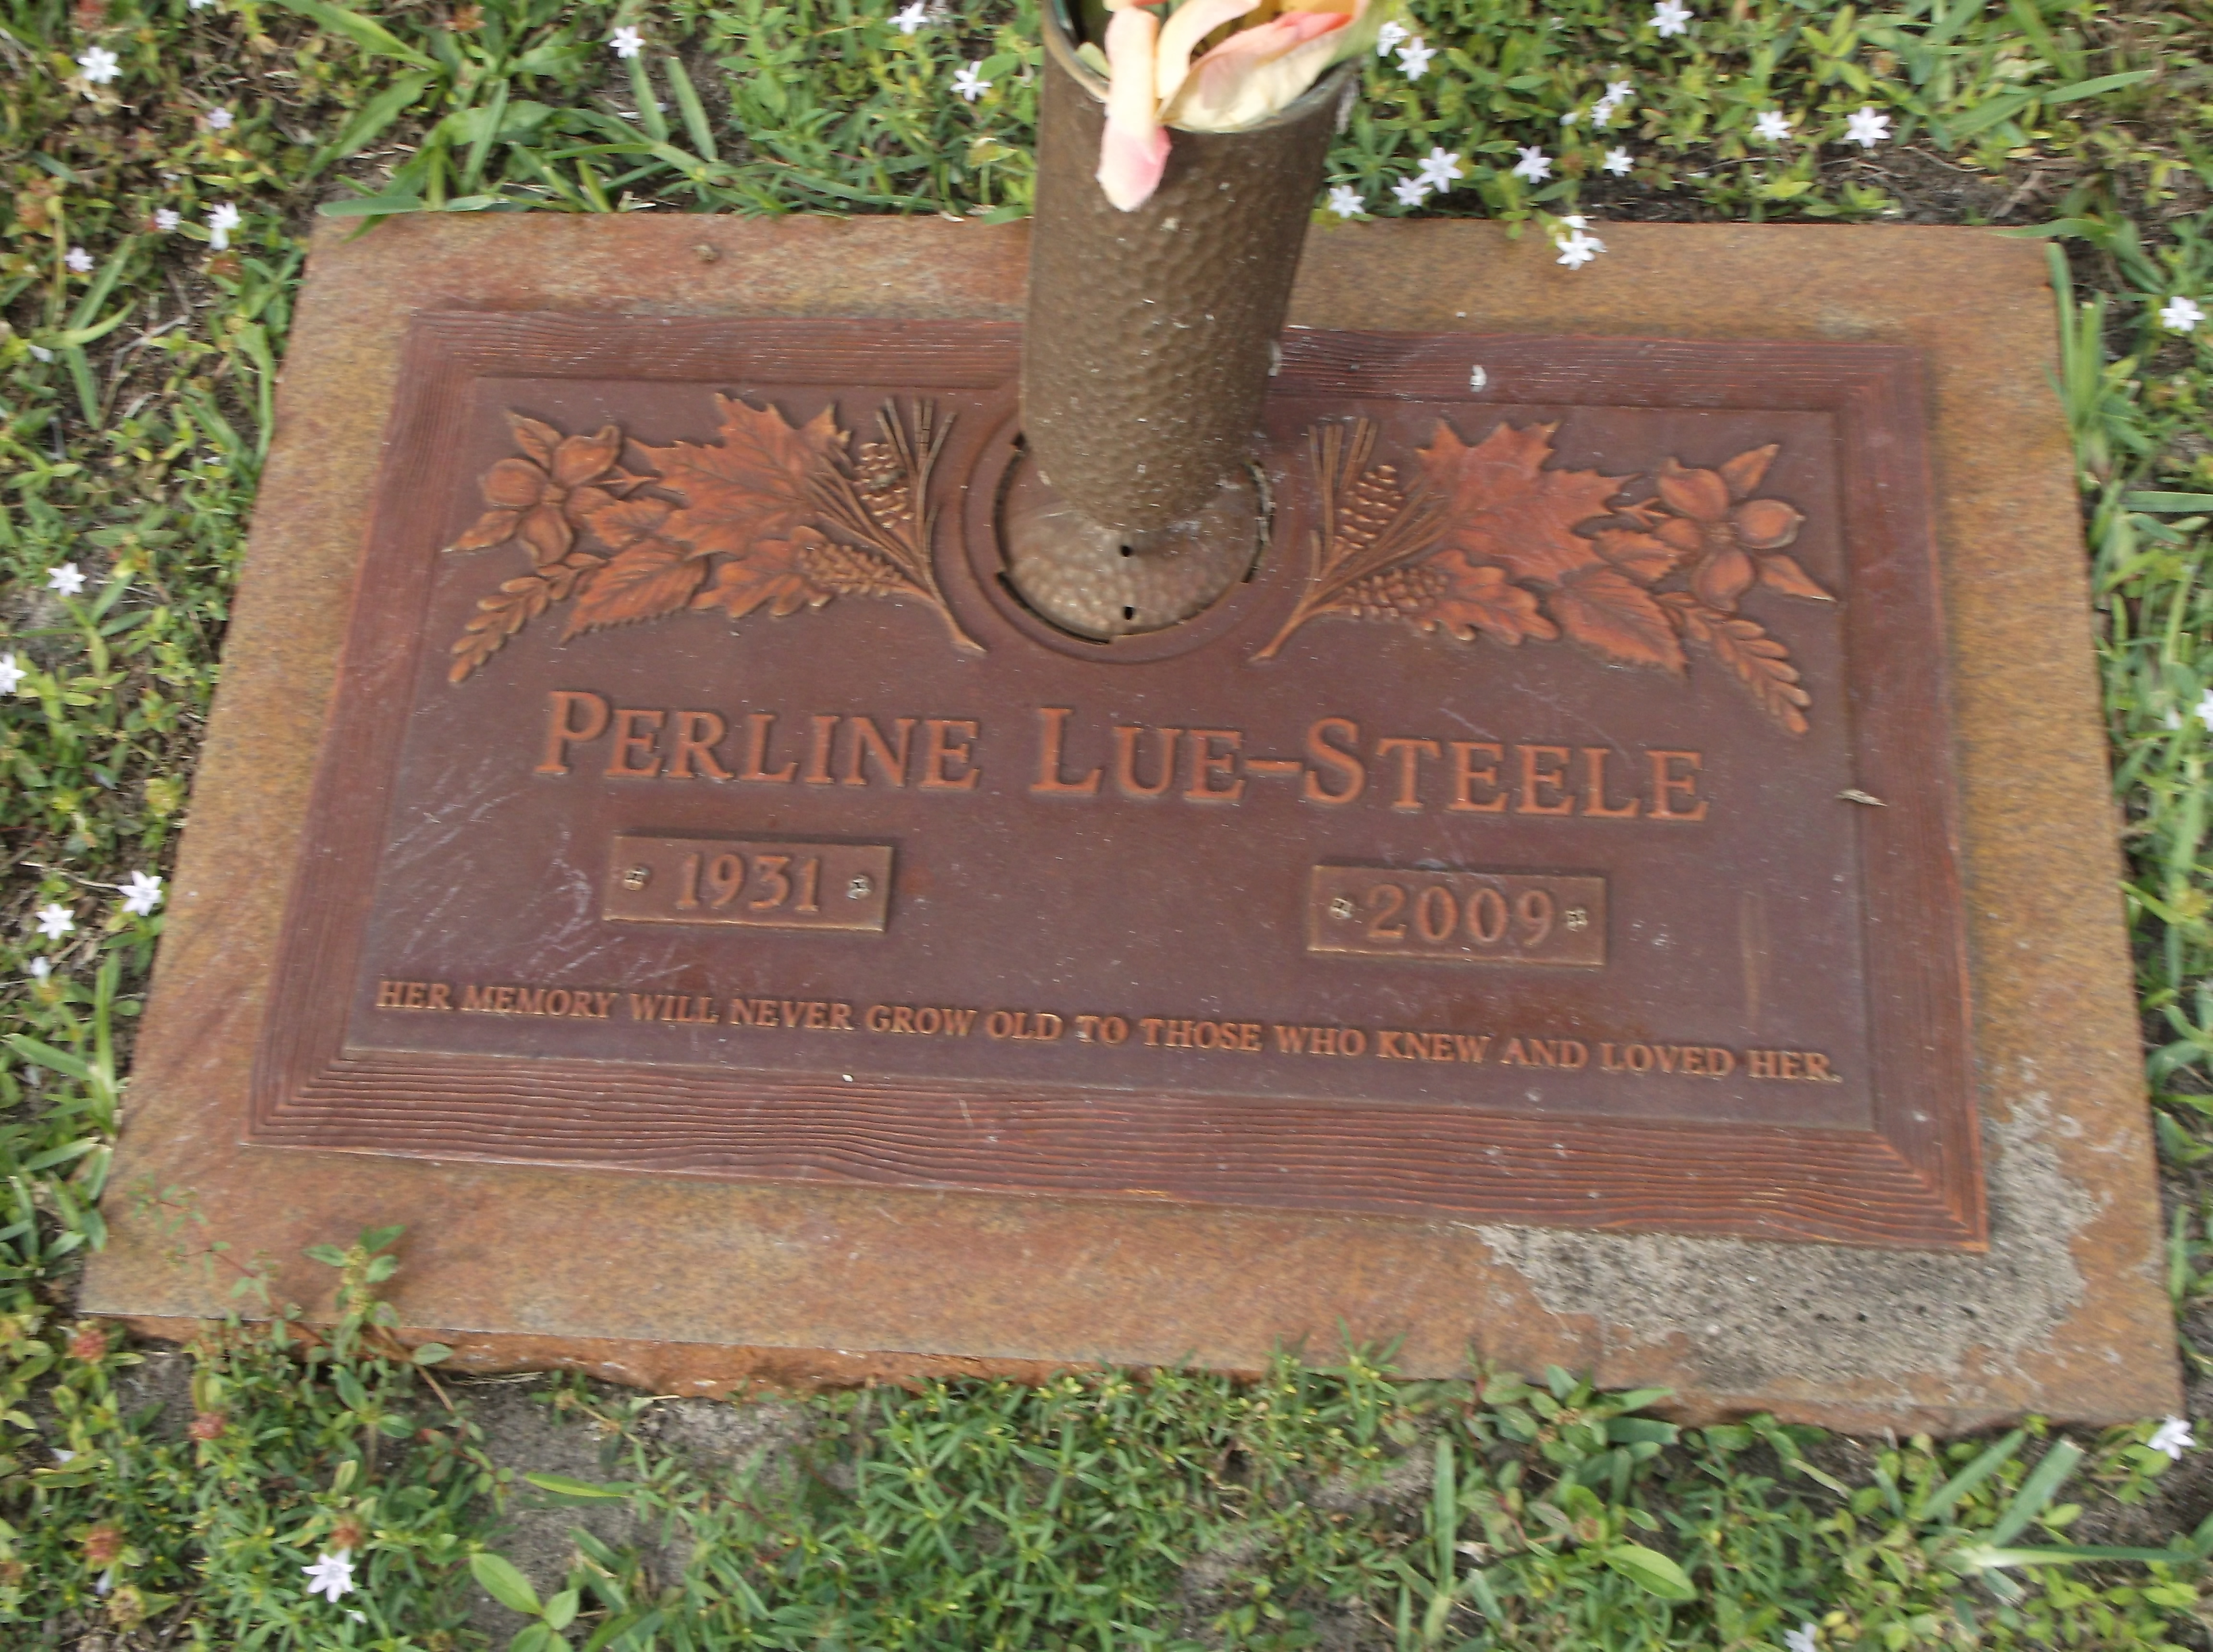 Perline Lue-Steele